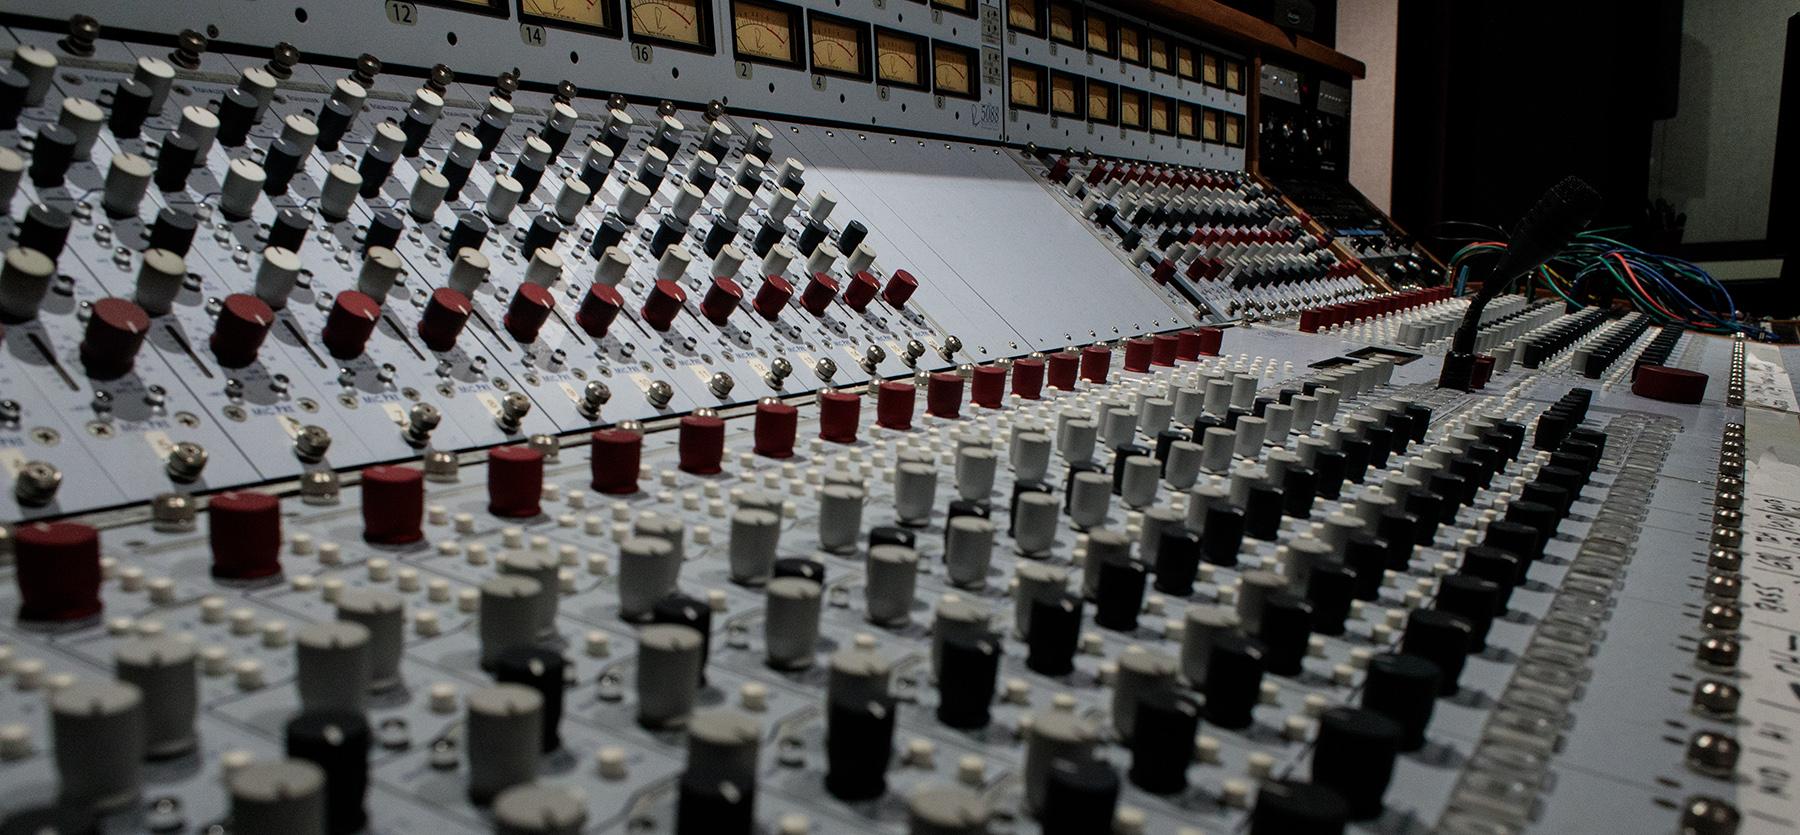 Close-up of a soundboard